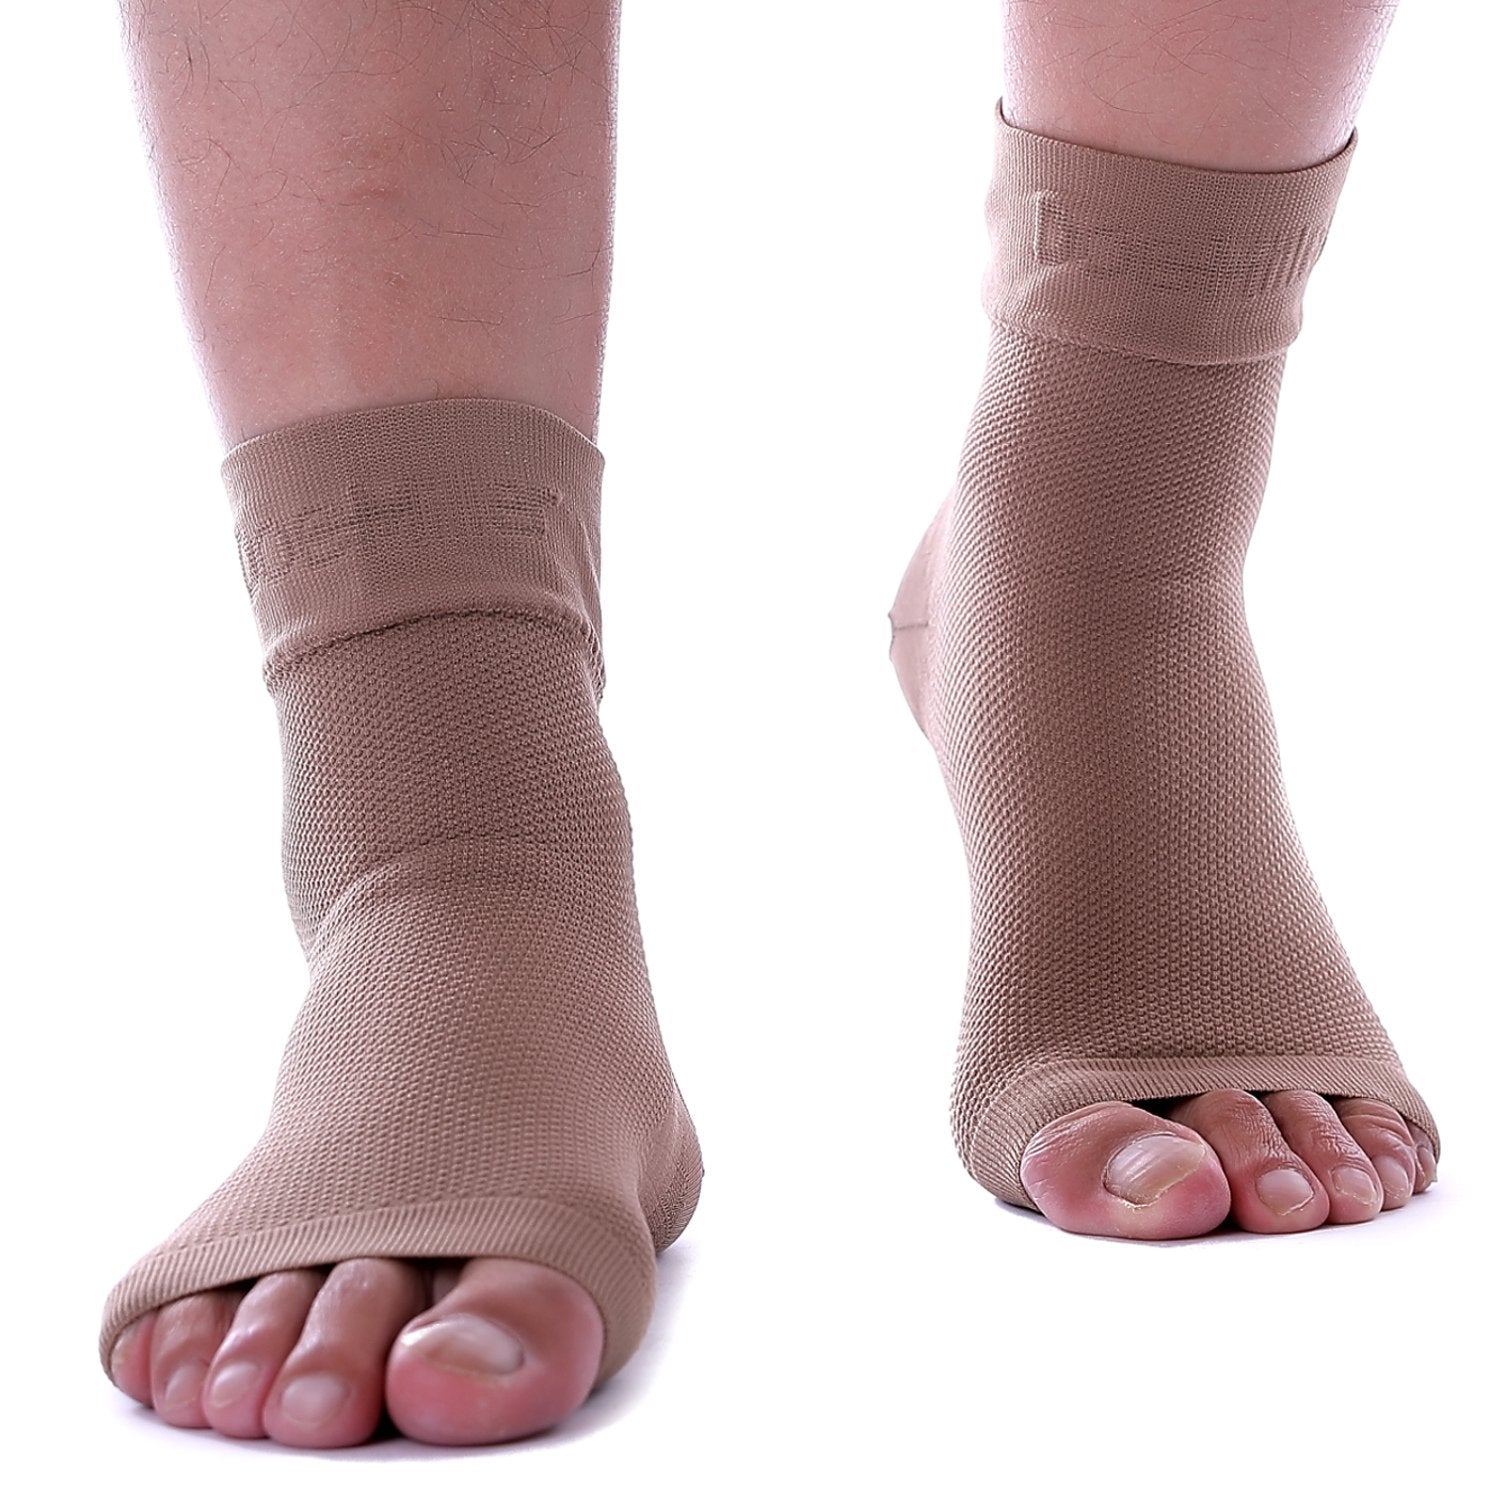 Do Compression Socks Help with Plantar Fasciitis?